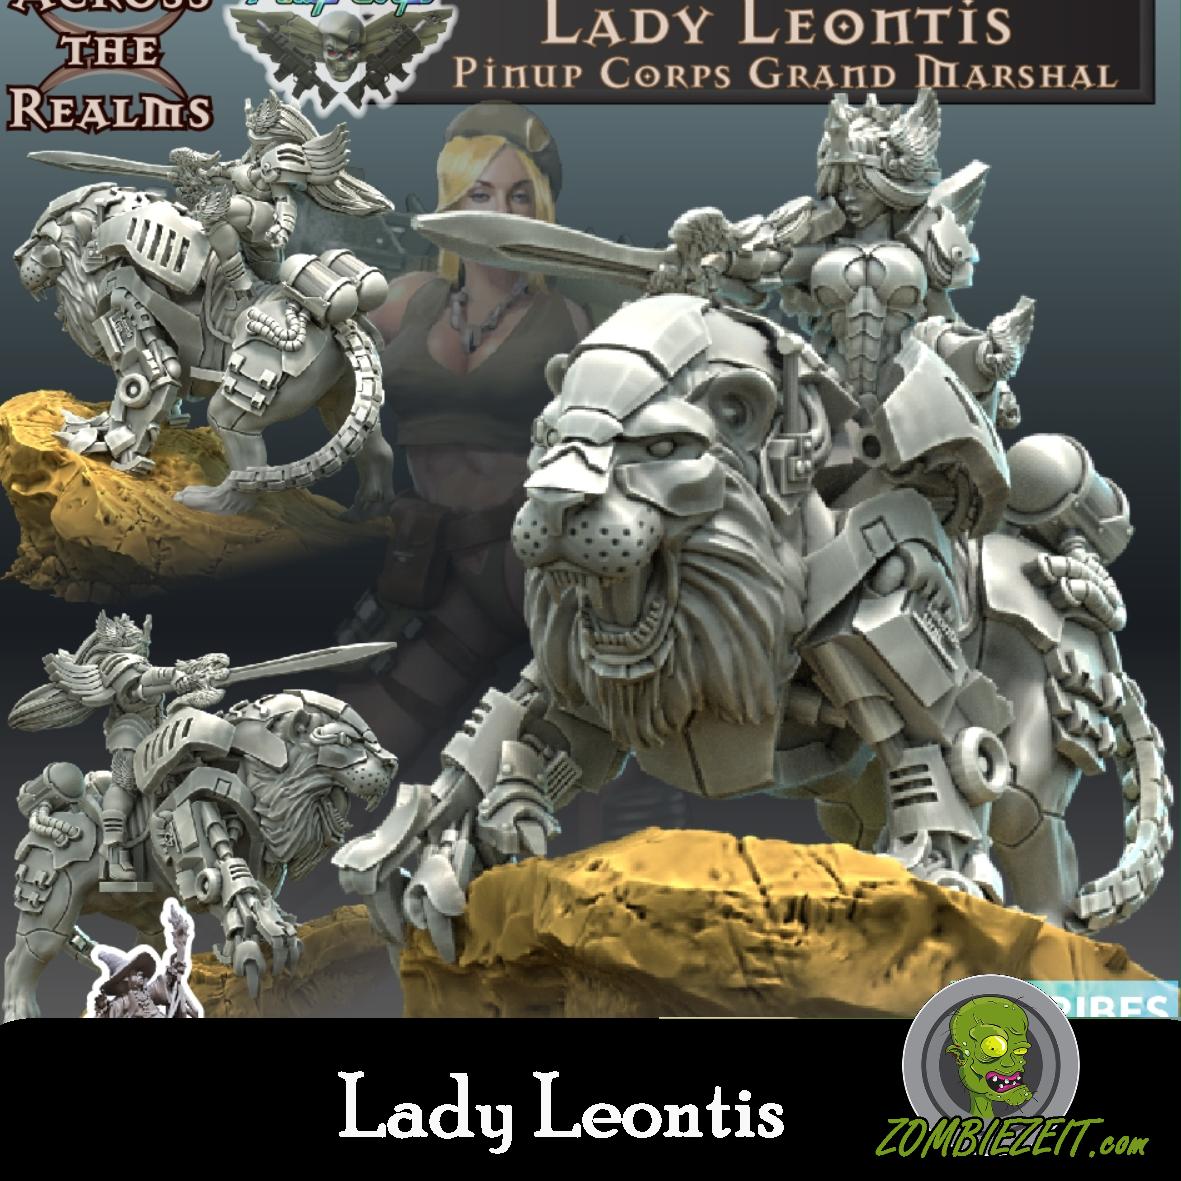 Lady Leontis